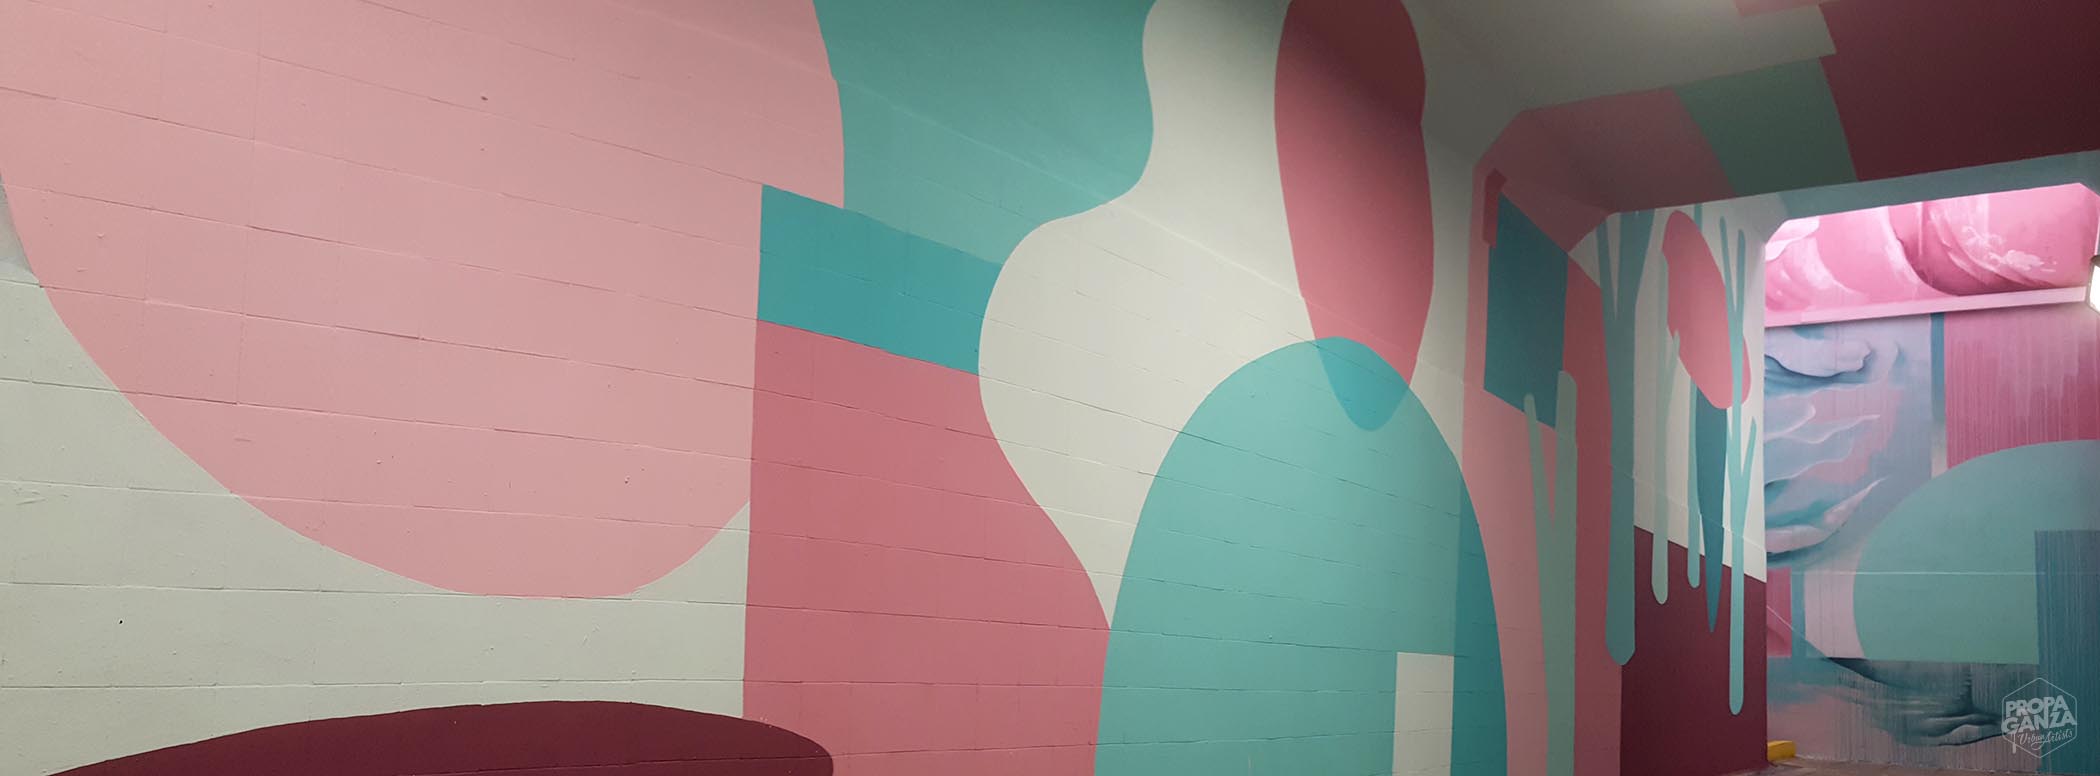 https://propaganza.be/nl/wp-content/uploads/sites/3/2019/04/adrien-roubens-abstract-paint-graffiti-street-art-vegetal-wave-tunnel-propaganza-hendlisz-pink-sixties-60-contemporary-2-1.jpg